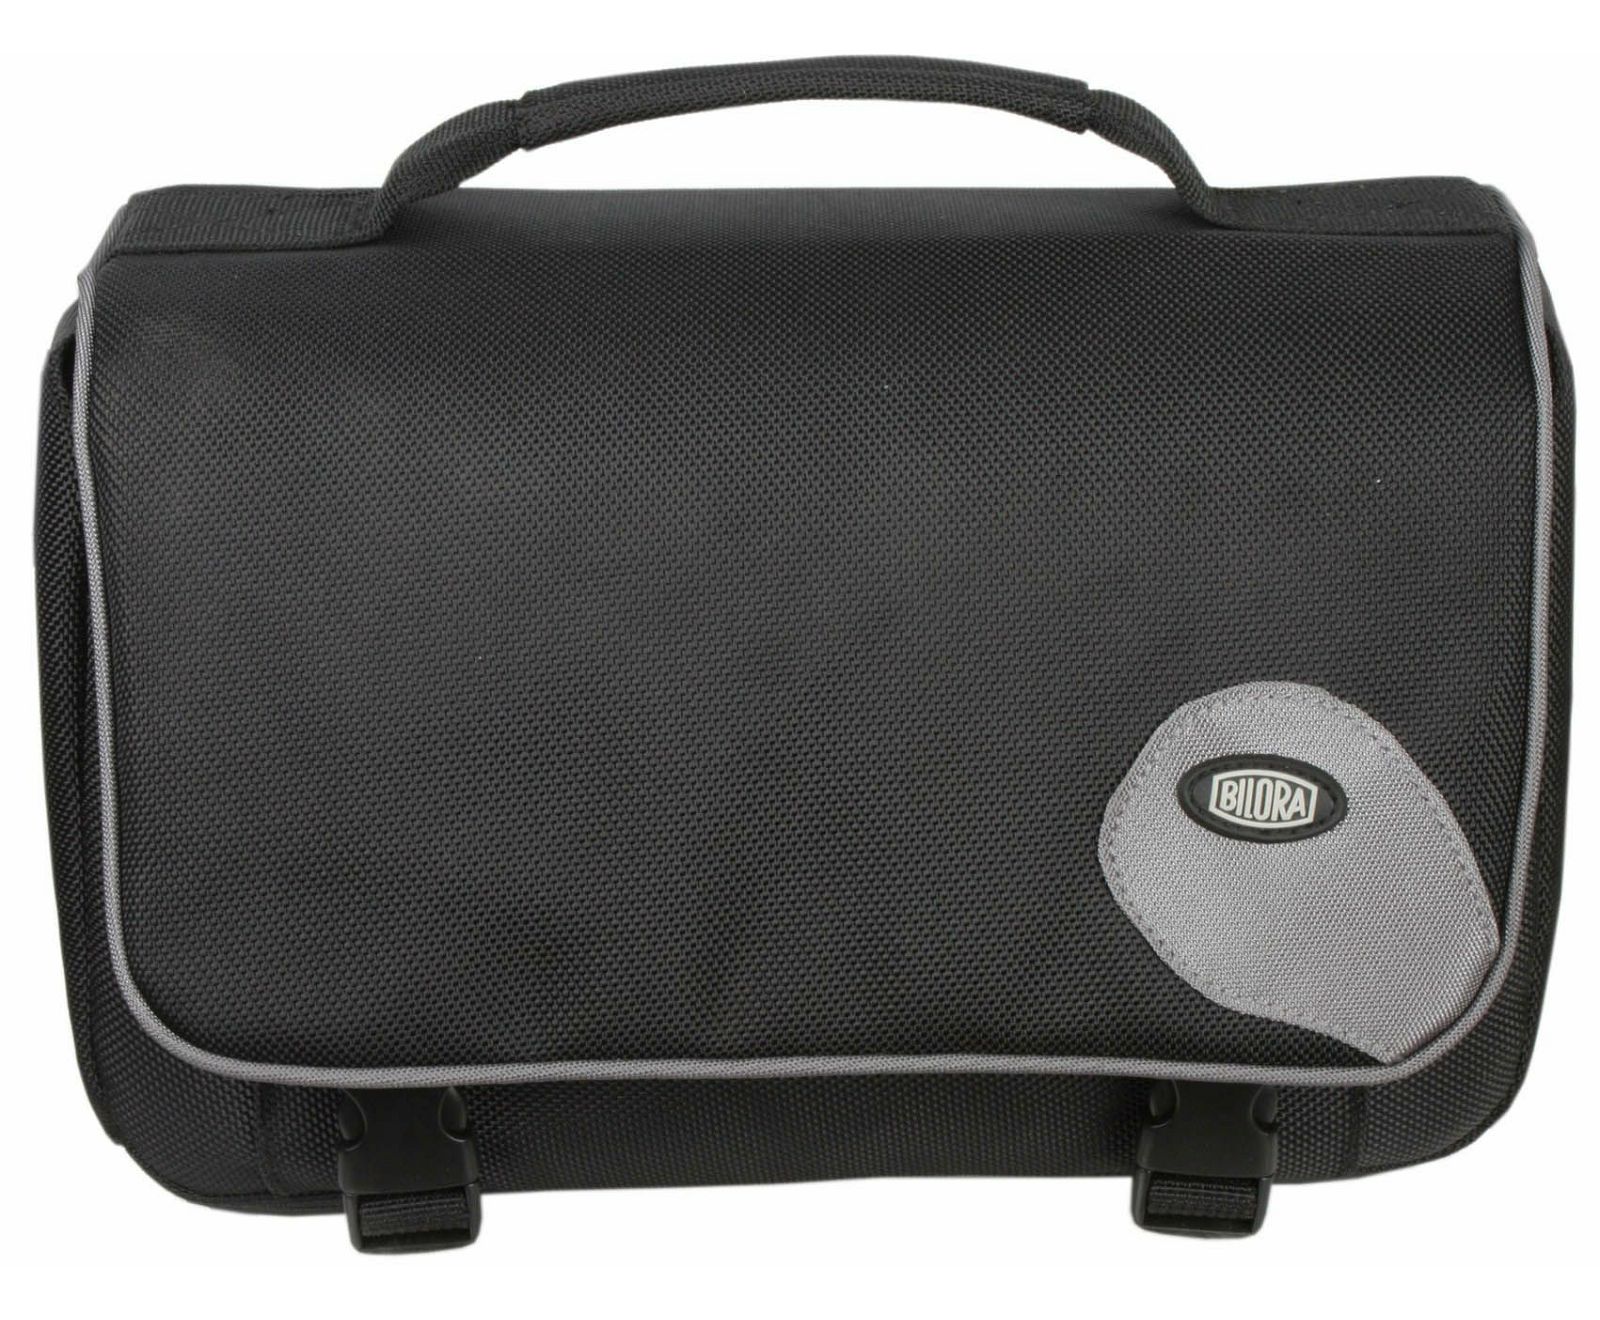 Bilora Standard Promo Bag (287-90) torba za DSLR, mirrorless ili kompaktni fotoaparat